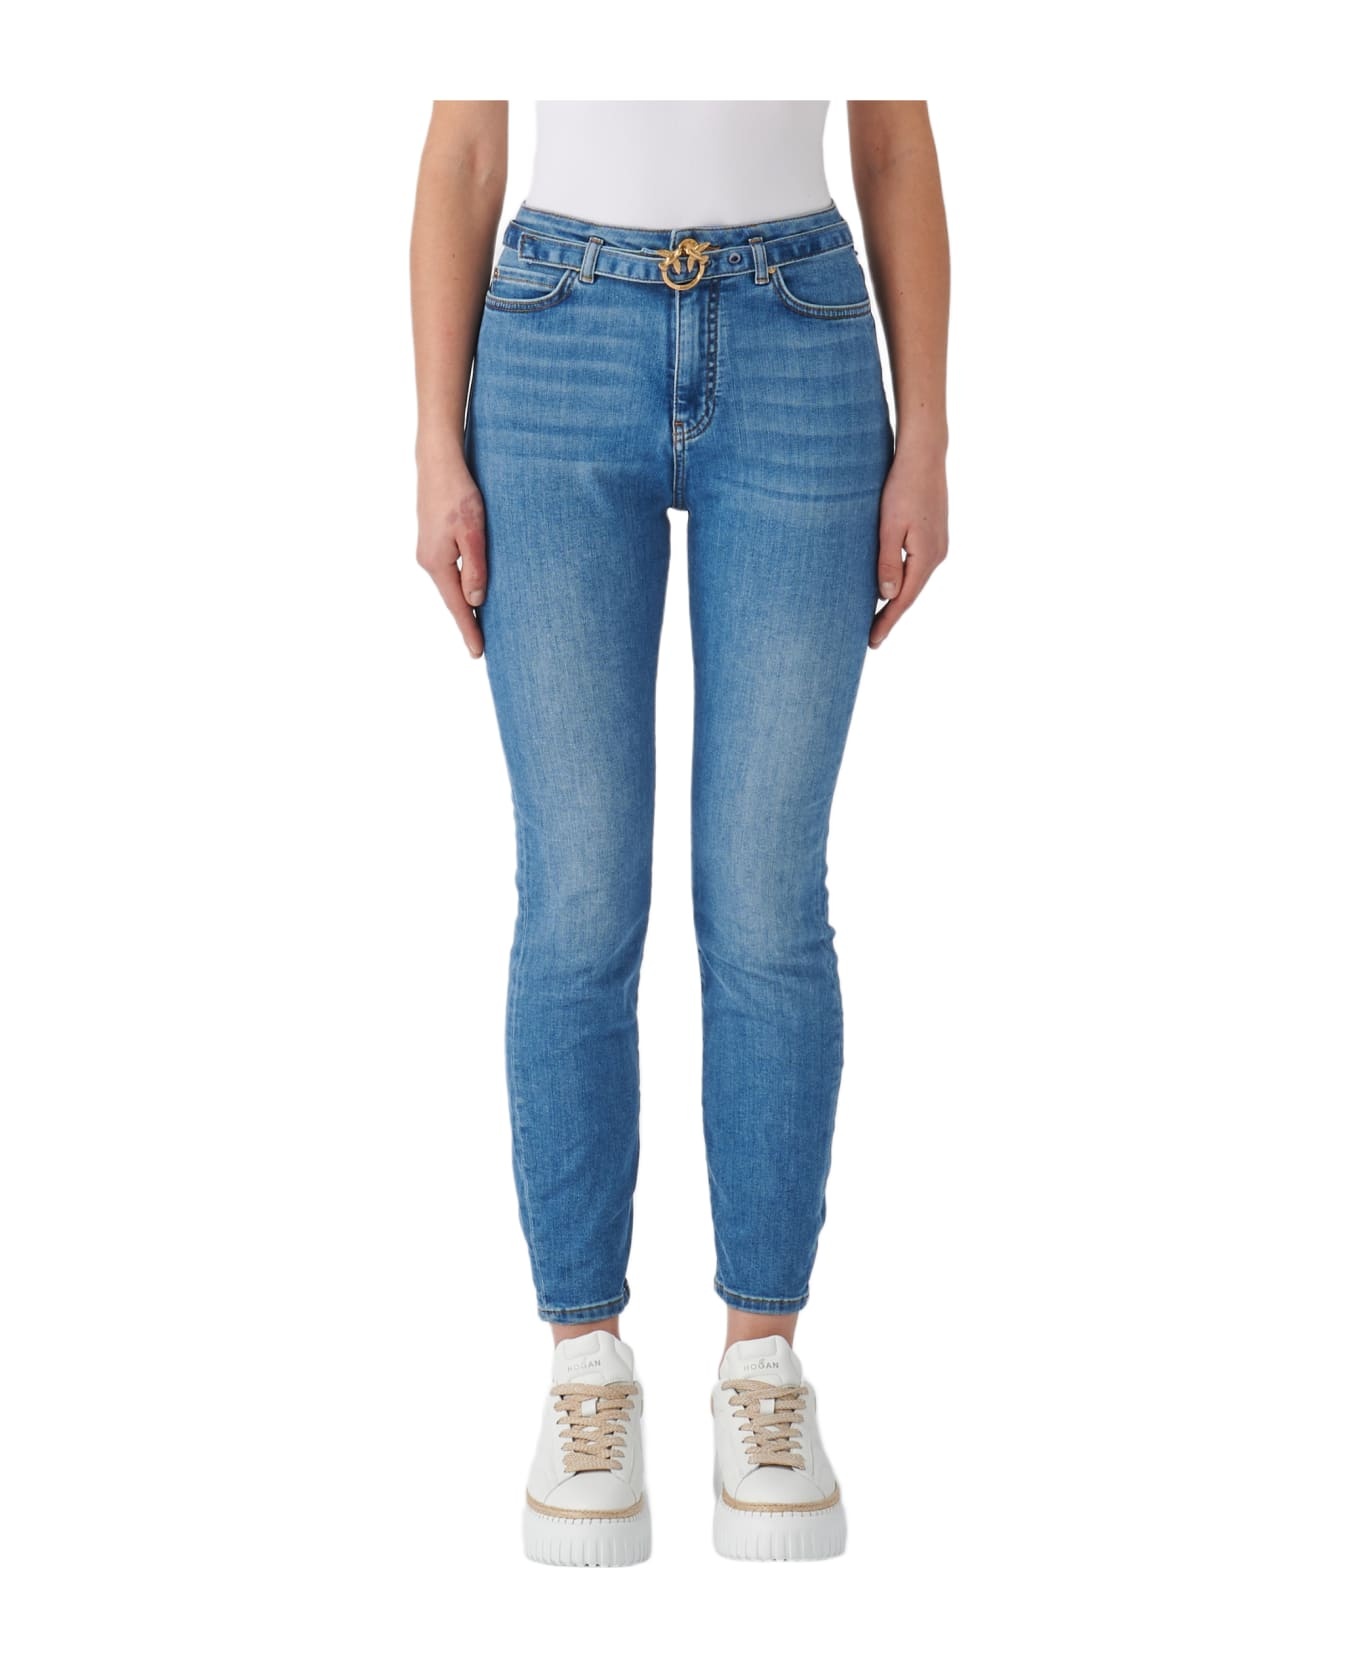 Susan Skinny Jeans - 1